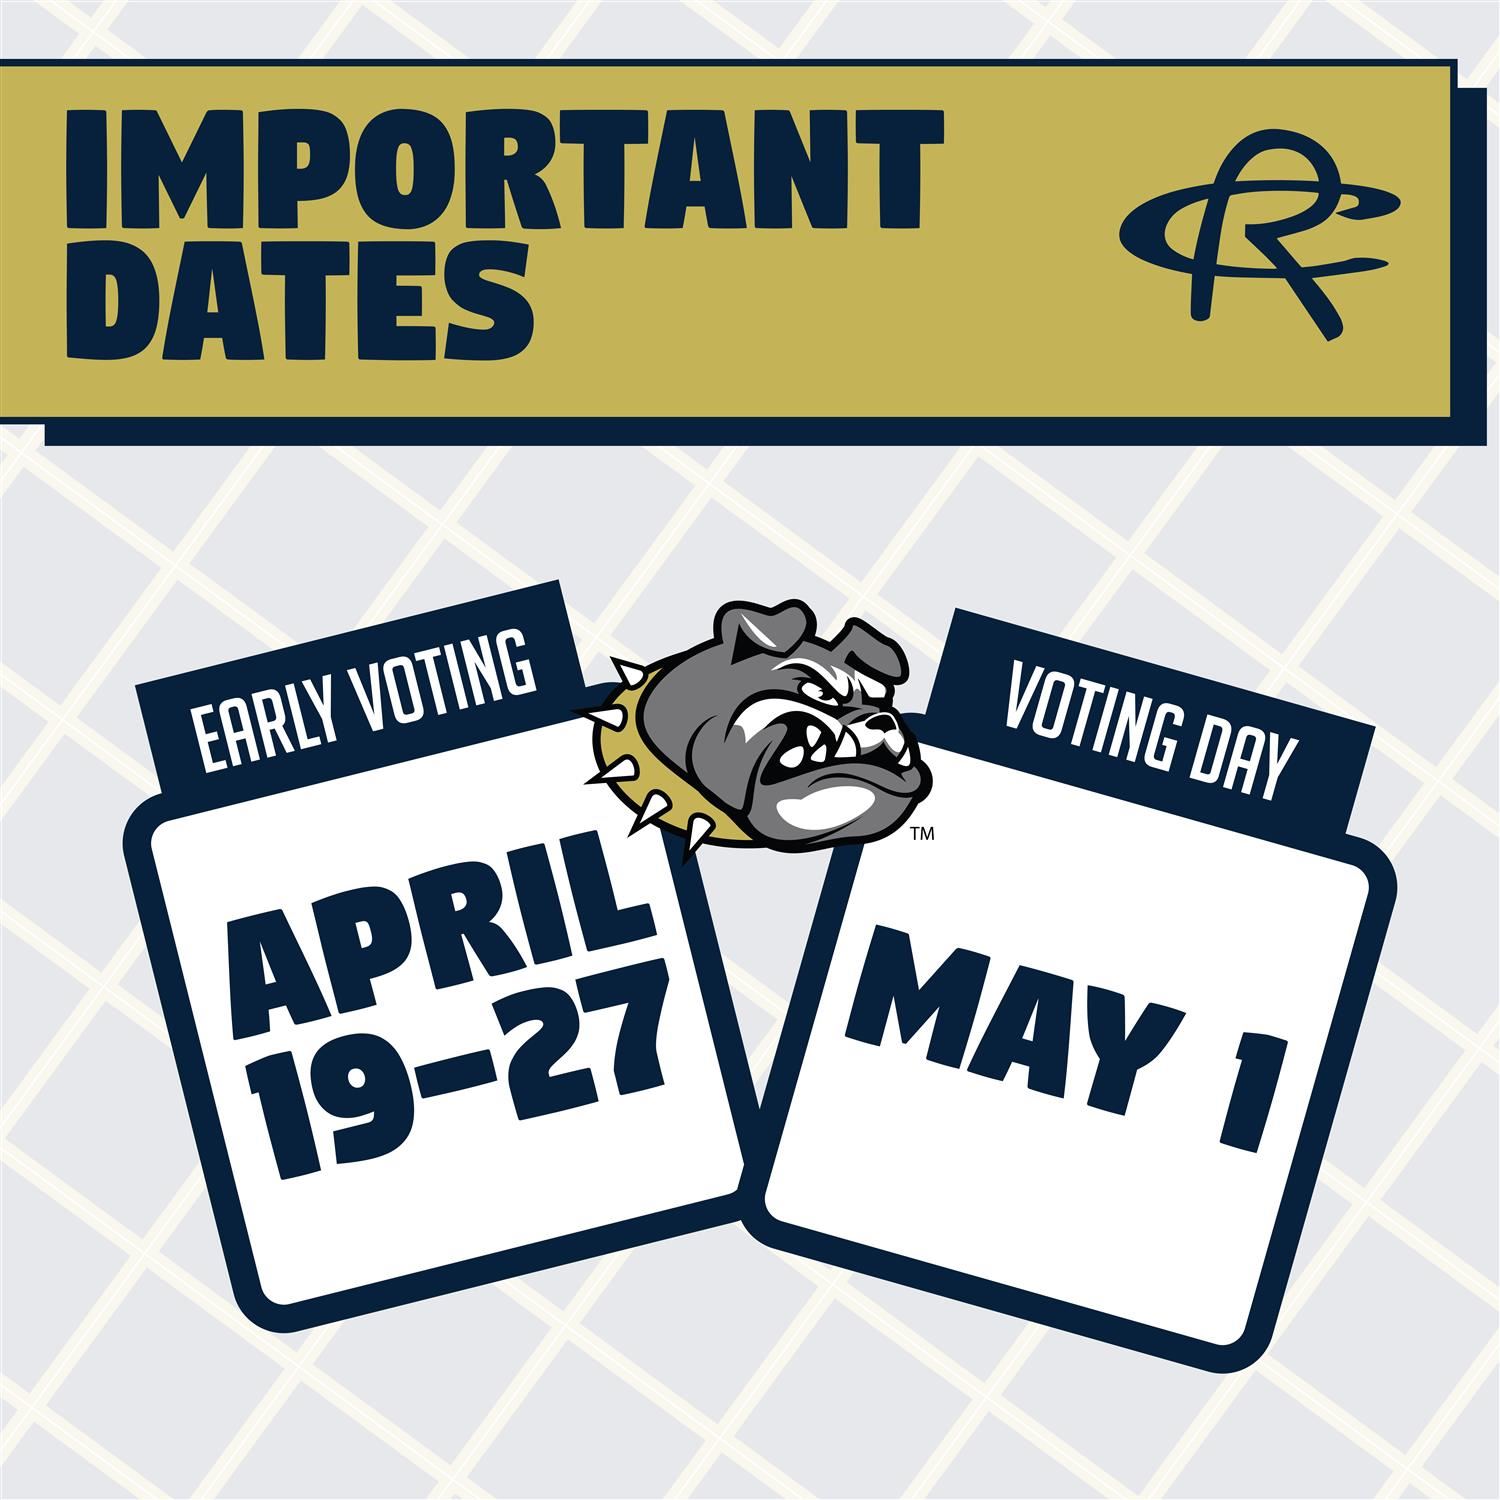 Important Voting Dates 